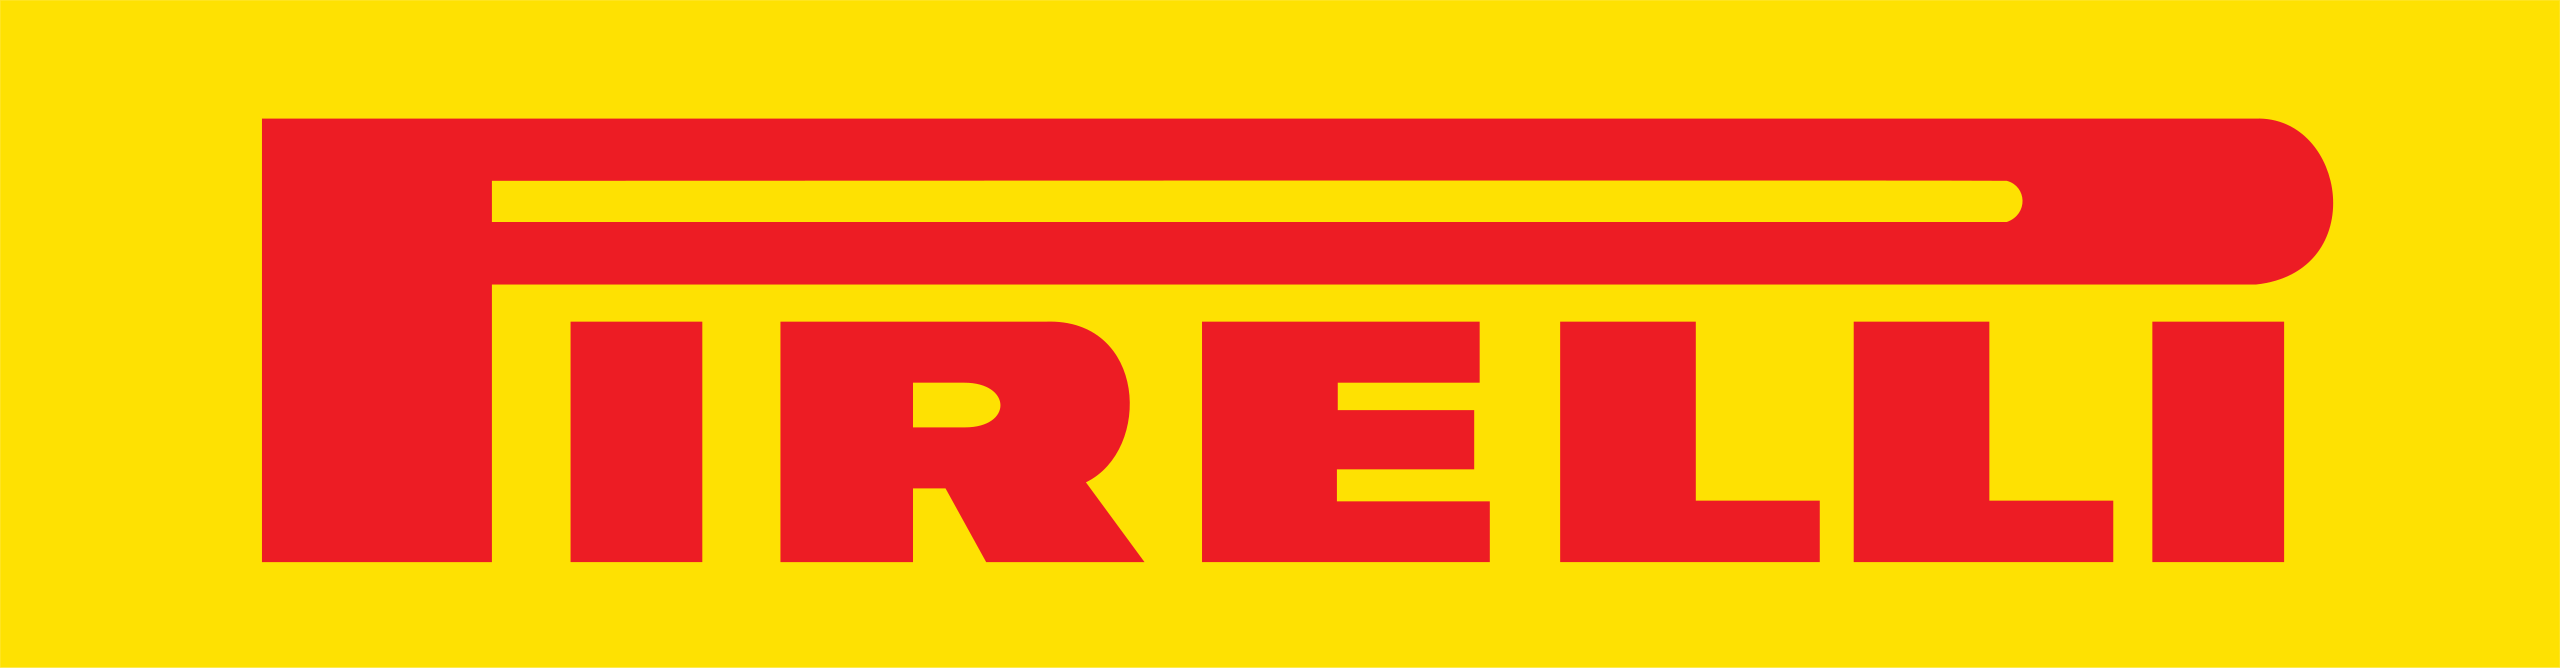 pirelli-logo-coco pr-singapore